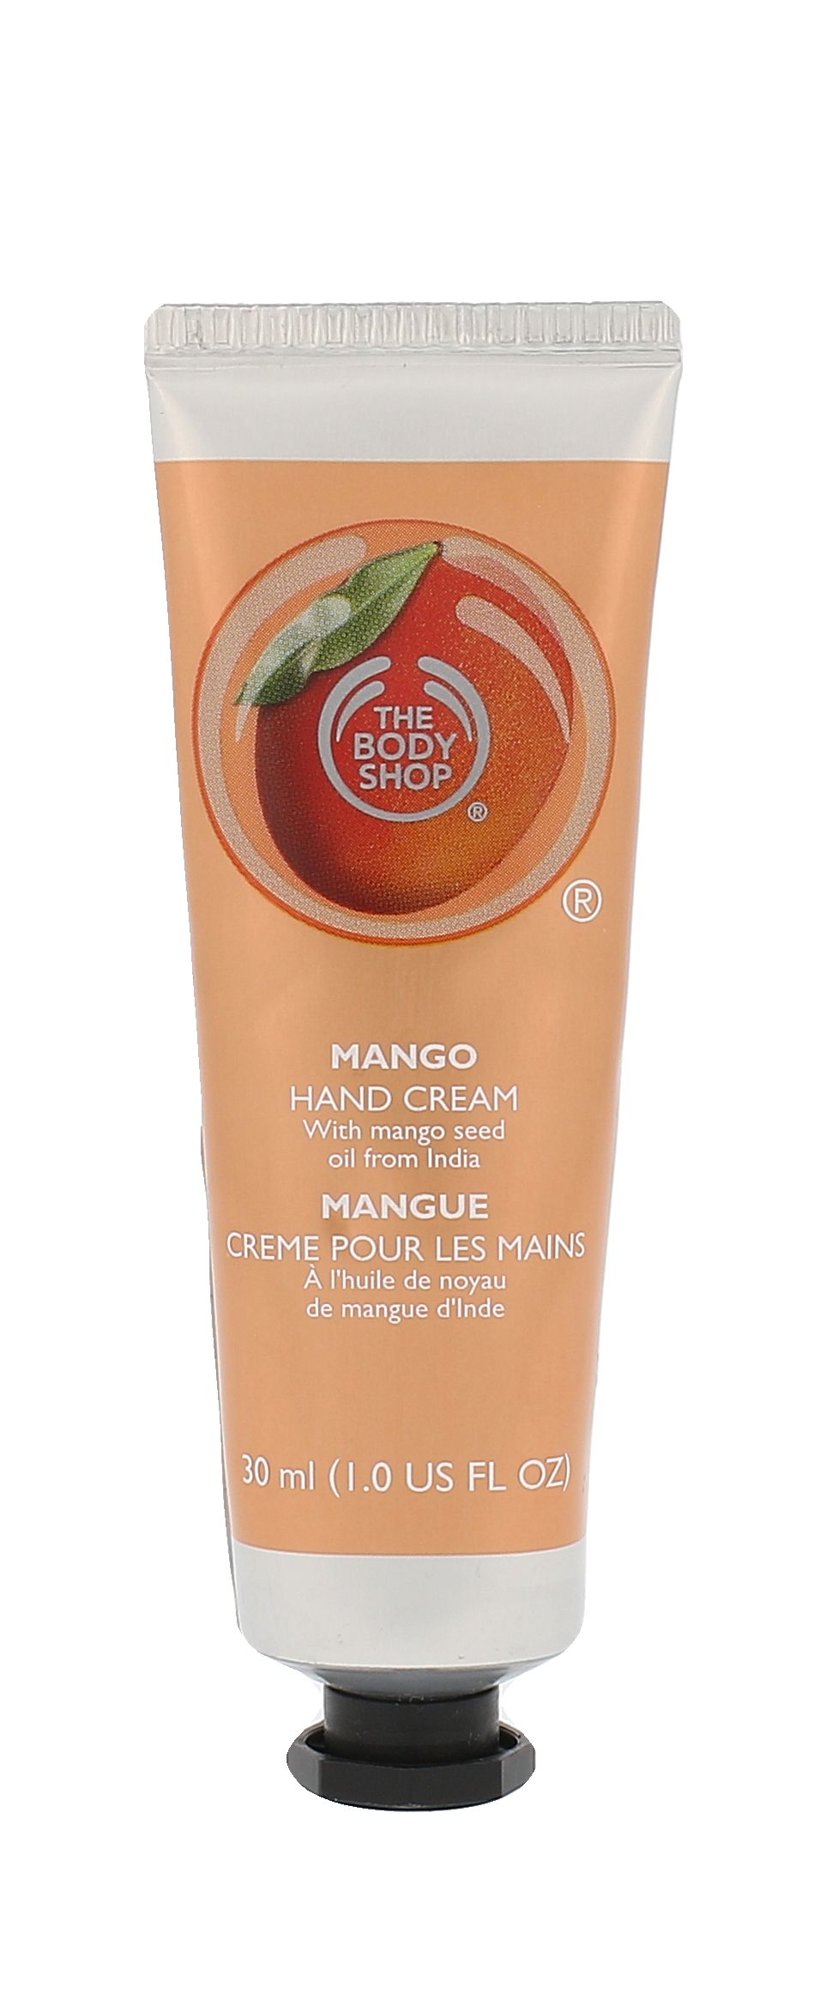 The Body Shop Mango Hand Cream